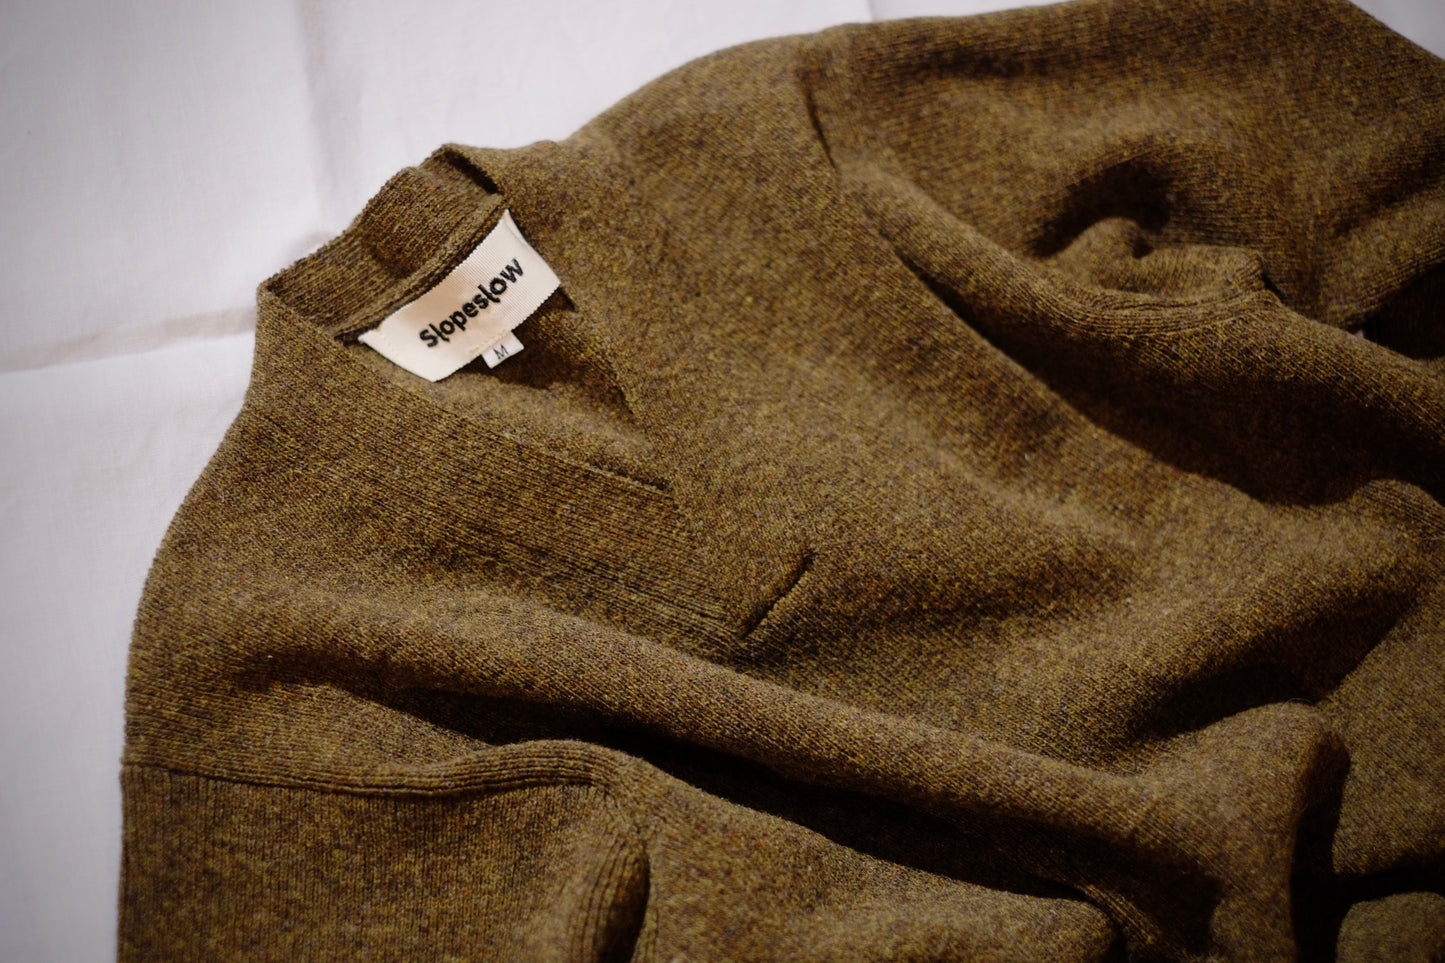 slopeslow / スロープスロー "Cross V neck sweater Hard twist shetland wool”